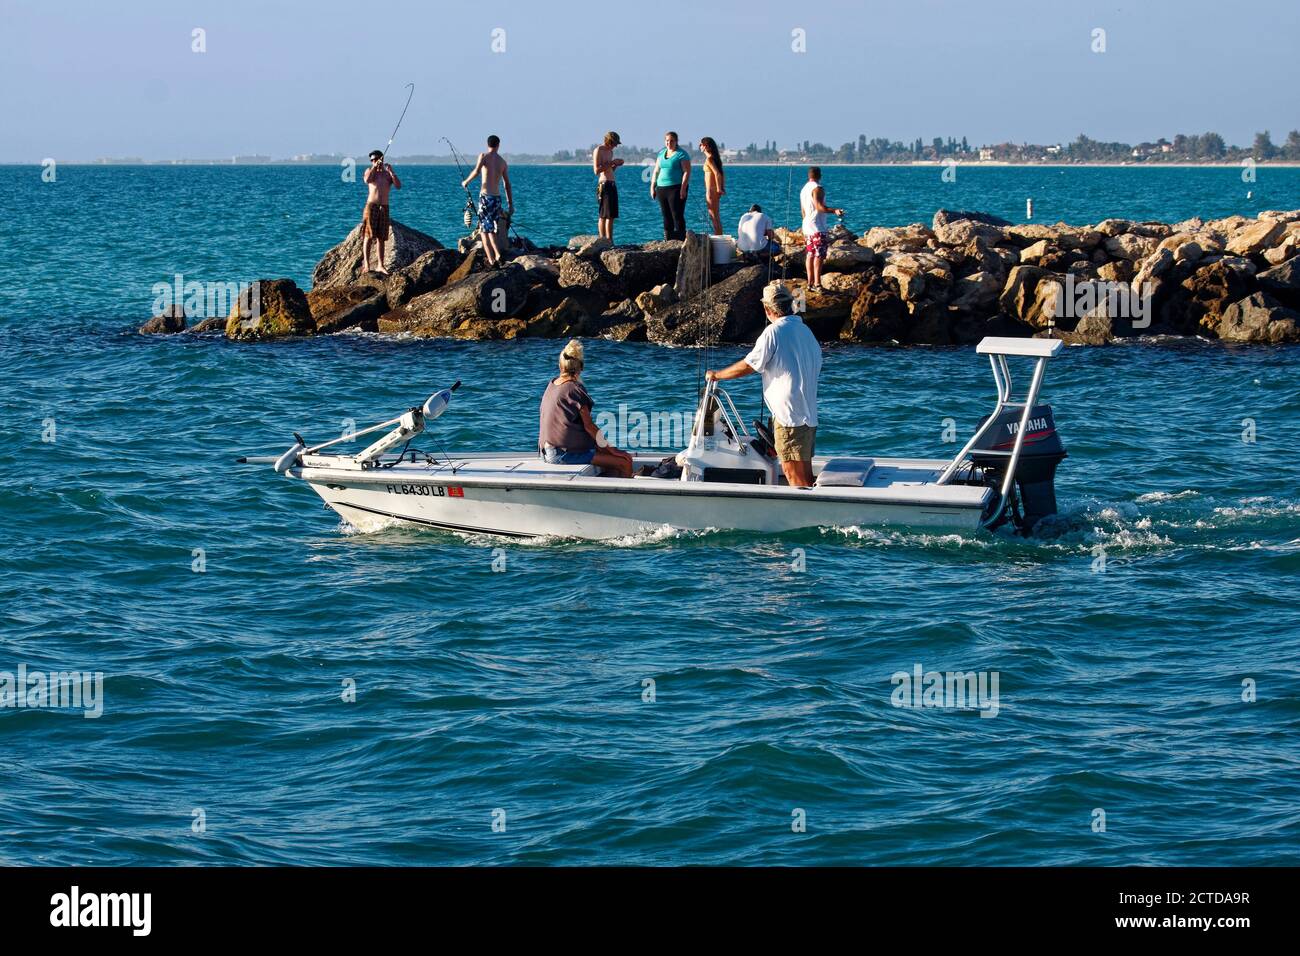 https://c8.alamy.com/comp/2CTDA9R/small-motor-boat-underway-trolling-motor-on-front-people-fishing-jetty-sport-recreation-gulf-of-mexico-venice-inlet-florida-venice-fl-2CTDA9R.jpg